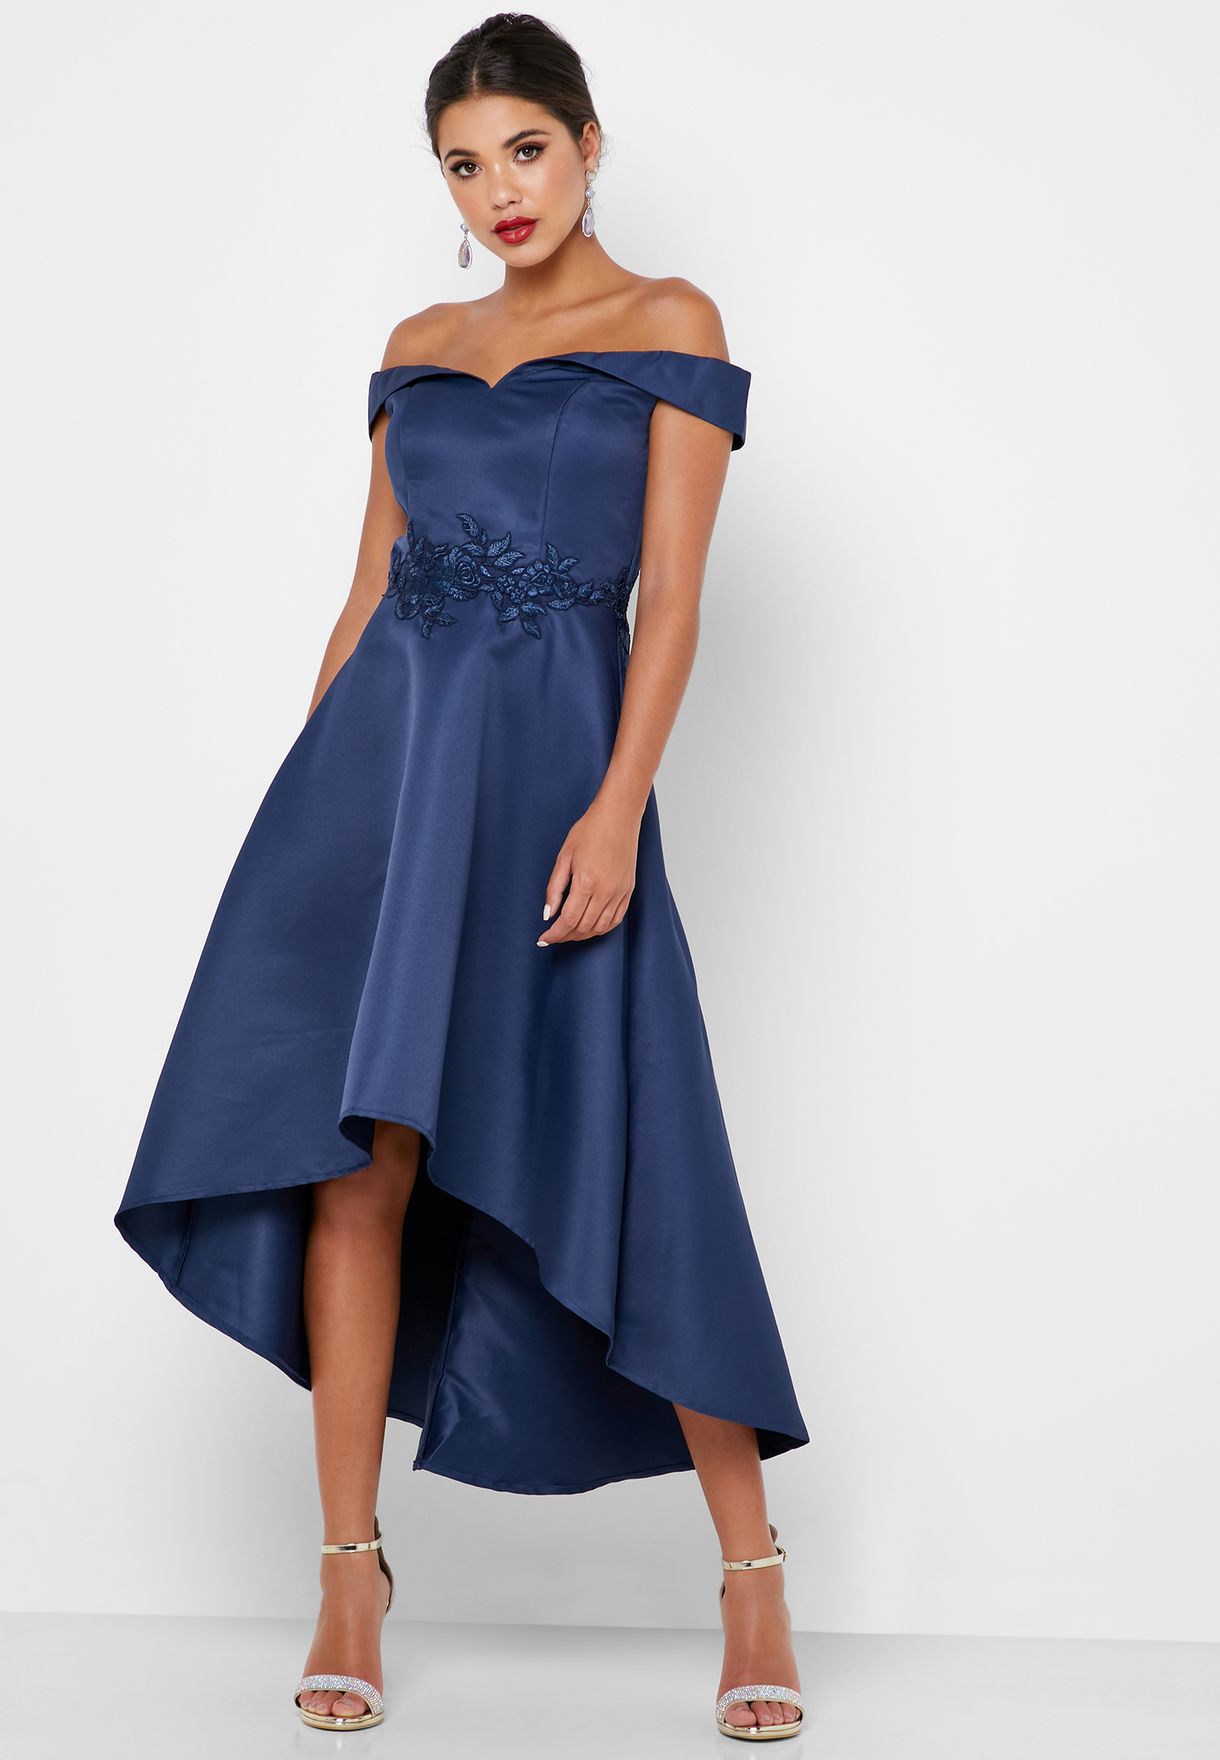 navy blue bardot dress